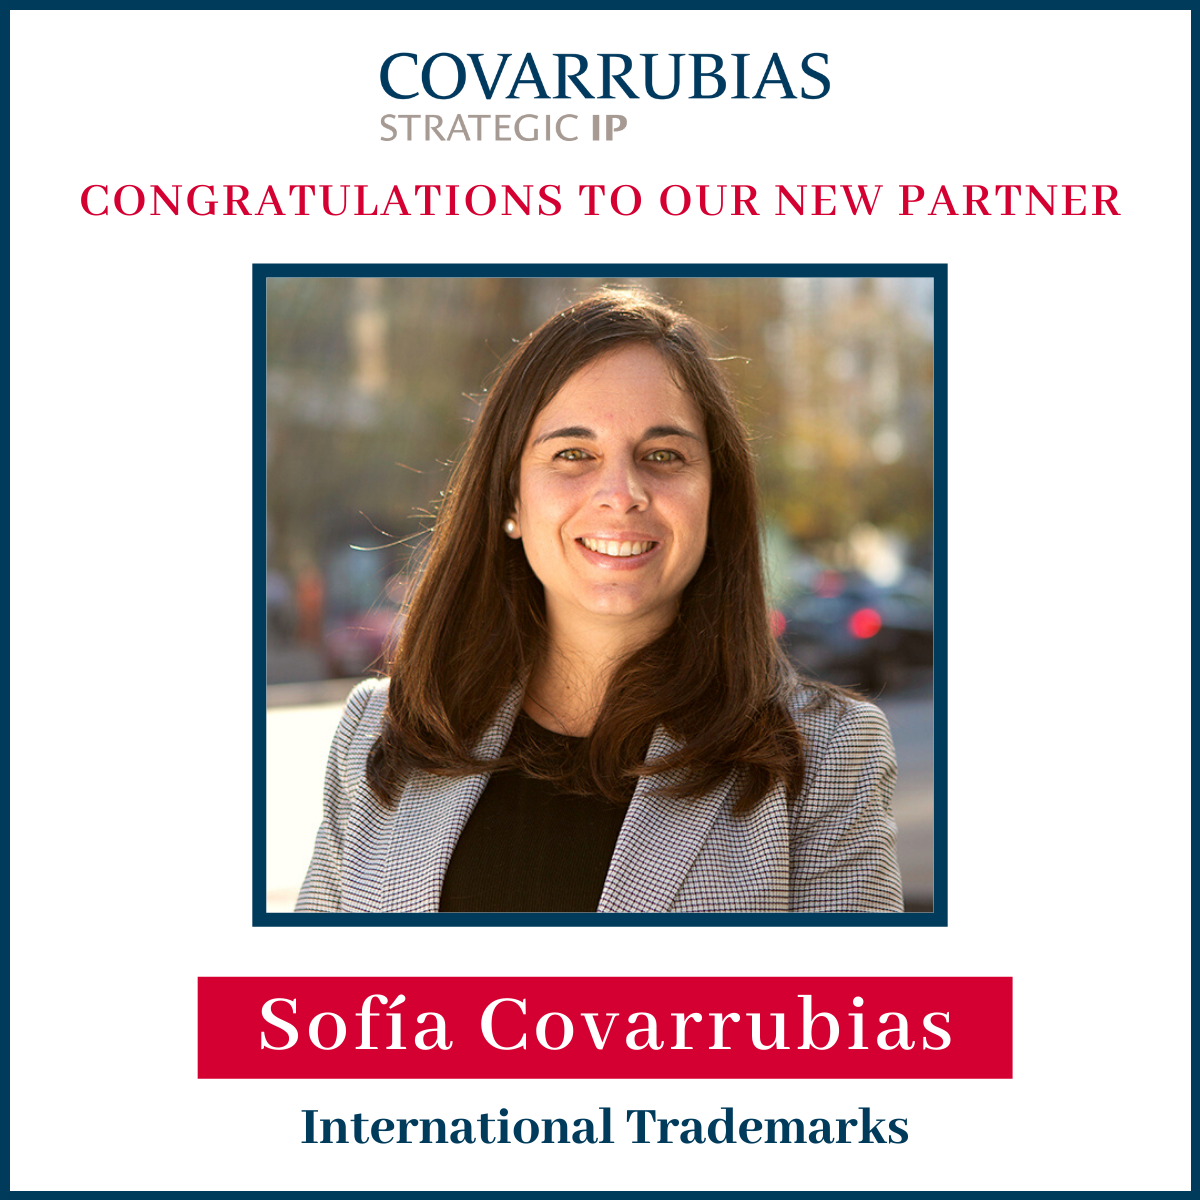 Sofía Covarrubias is named partner of Covarrubias